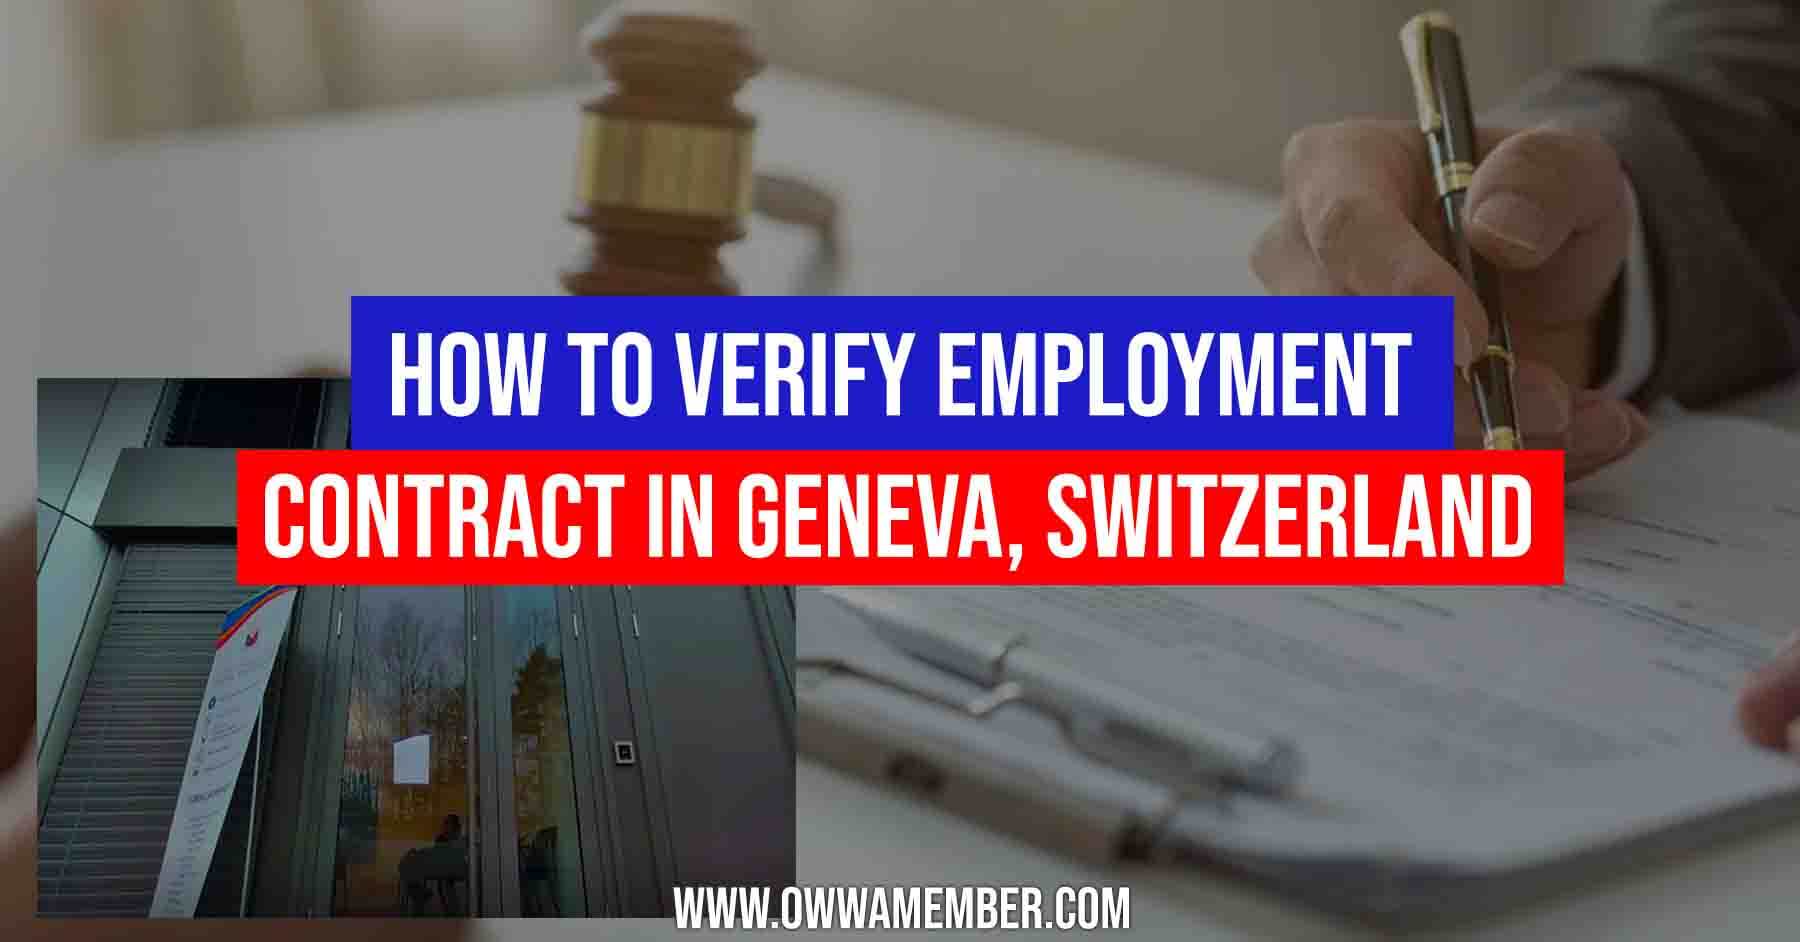 contract verification process in geneva switzerland